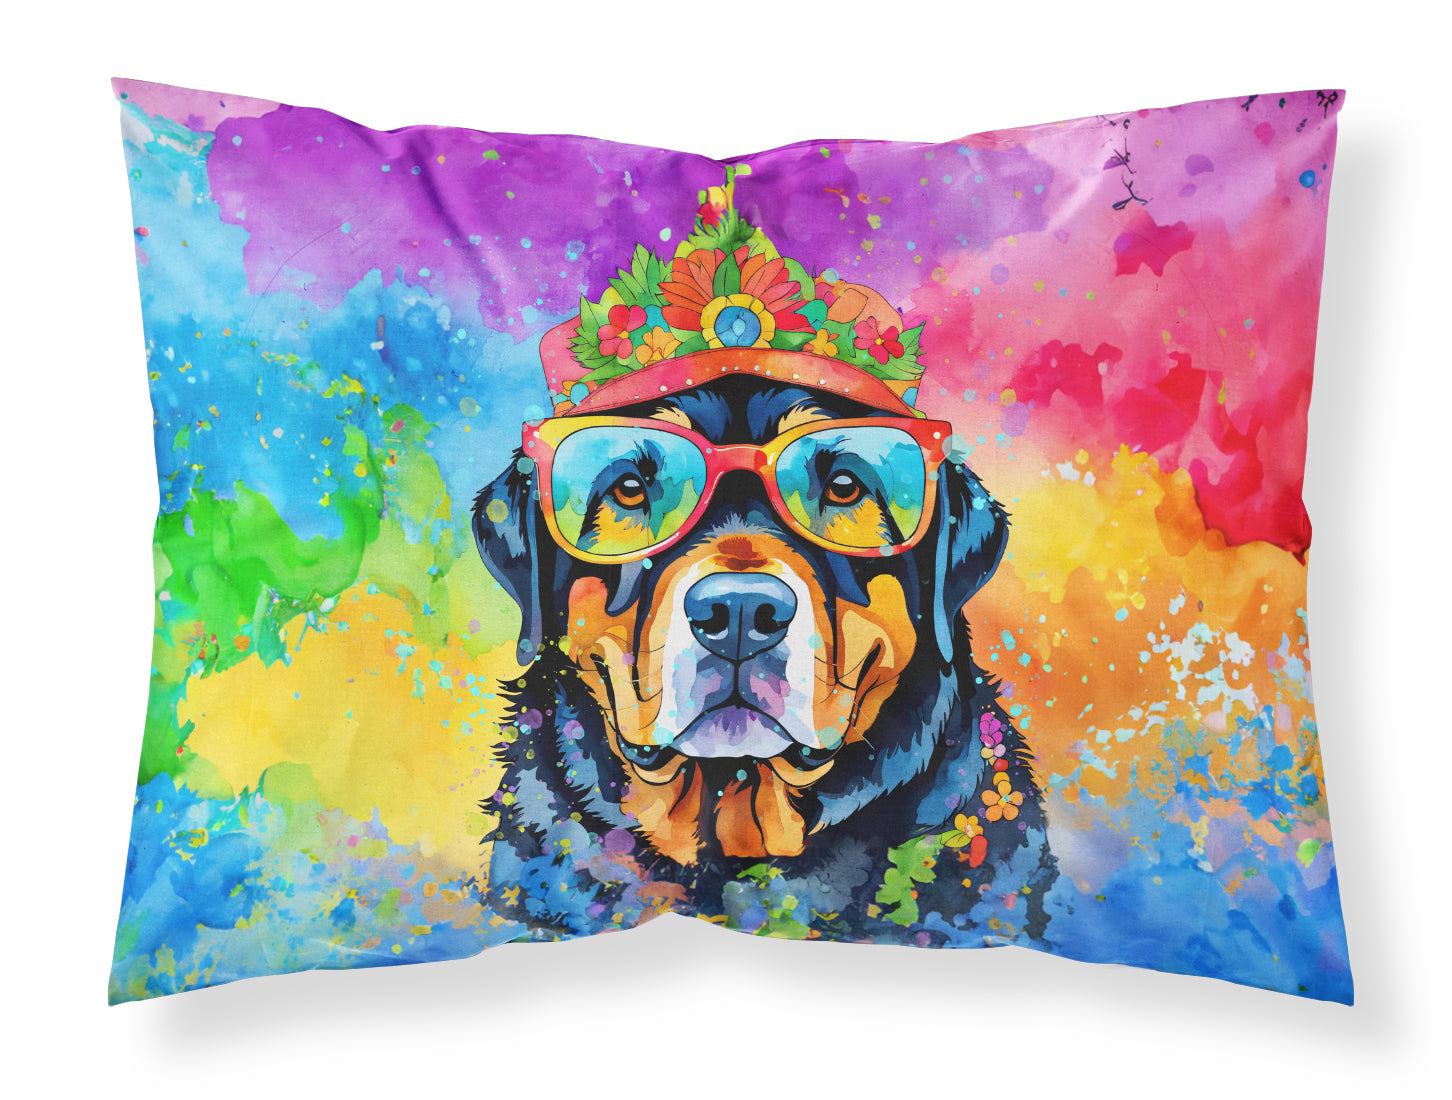 Buy this Rottweiler Hippie Dawg Standard Pillowcase